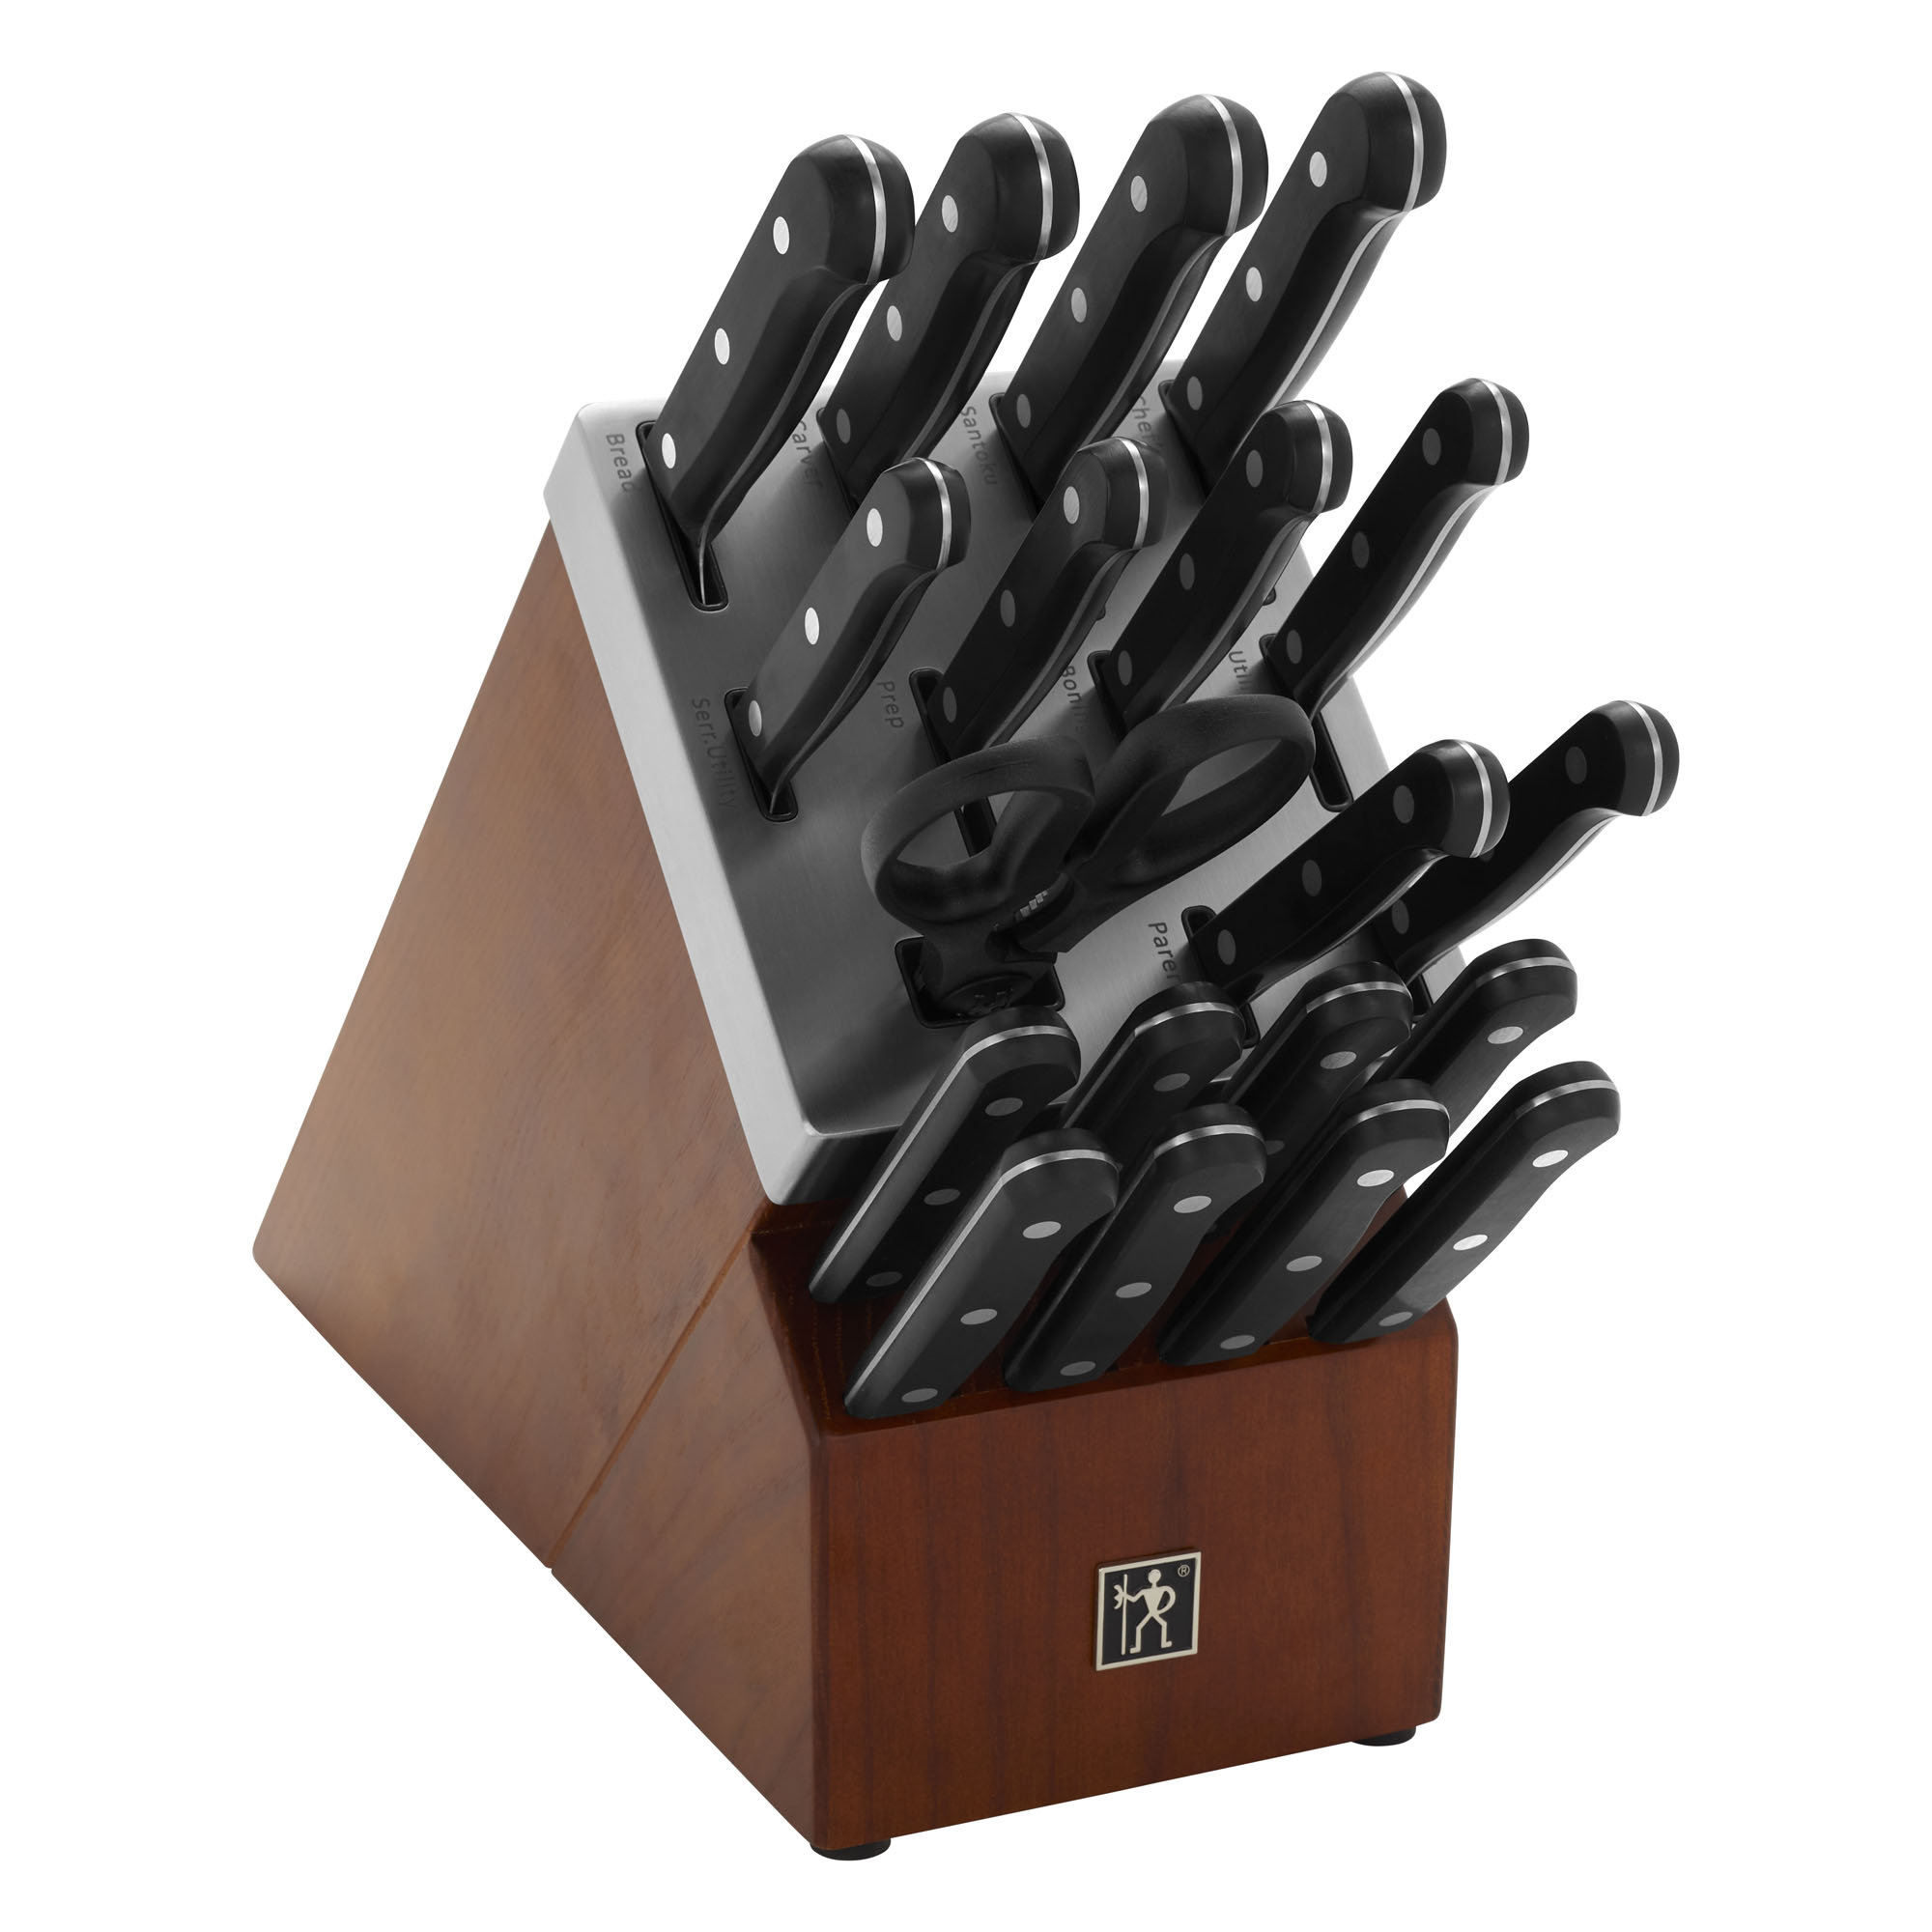 Viking 10-Piece True Forged Cutlery Set w/ Block